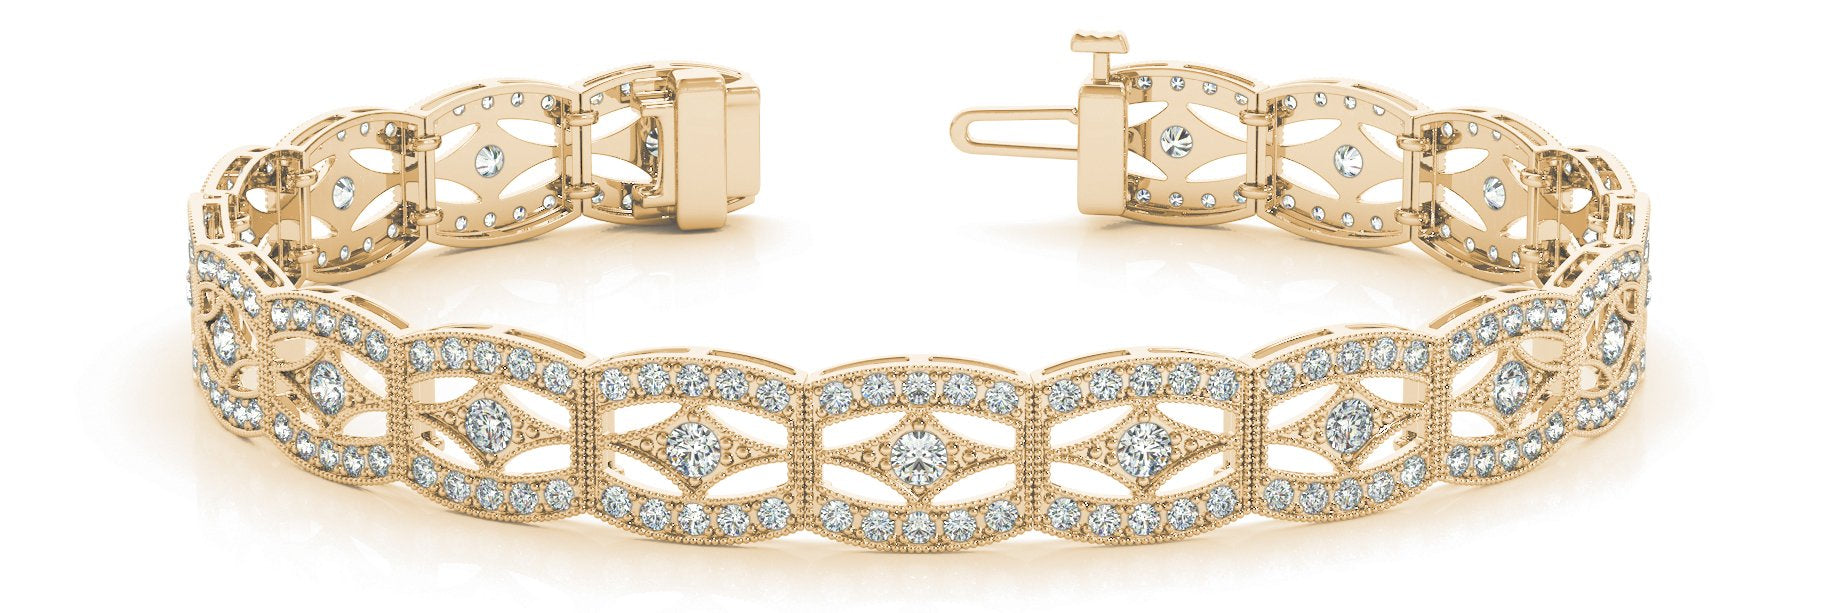 Fancy Diamond Bracelet Ladies 2.68ct tw - 14kt Yellow Gold